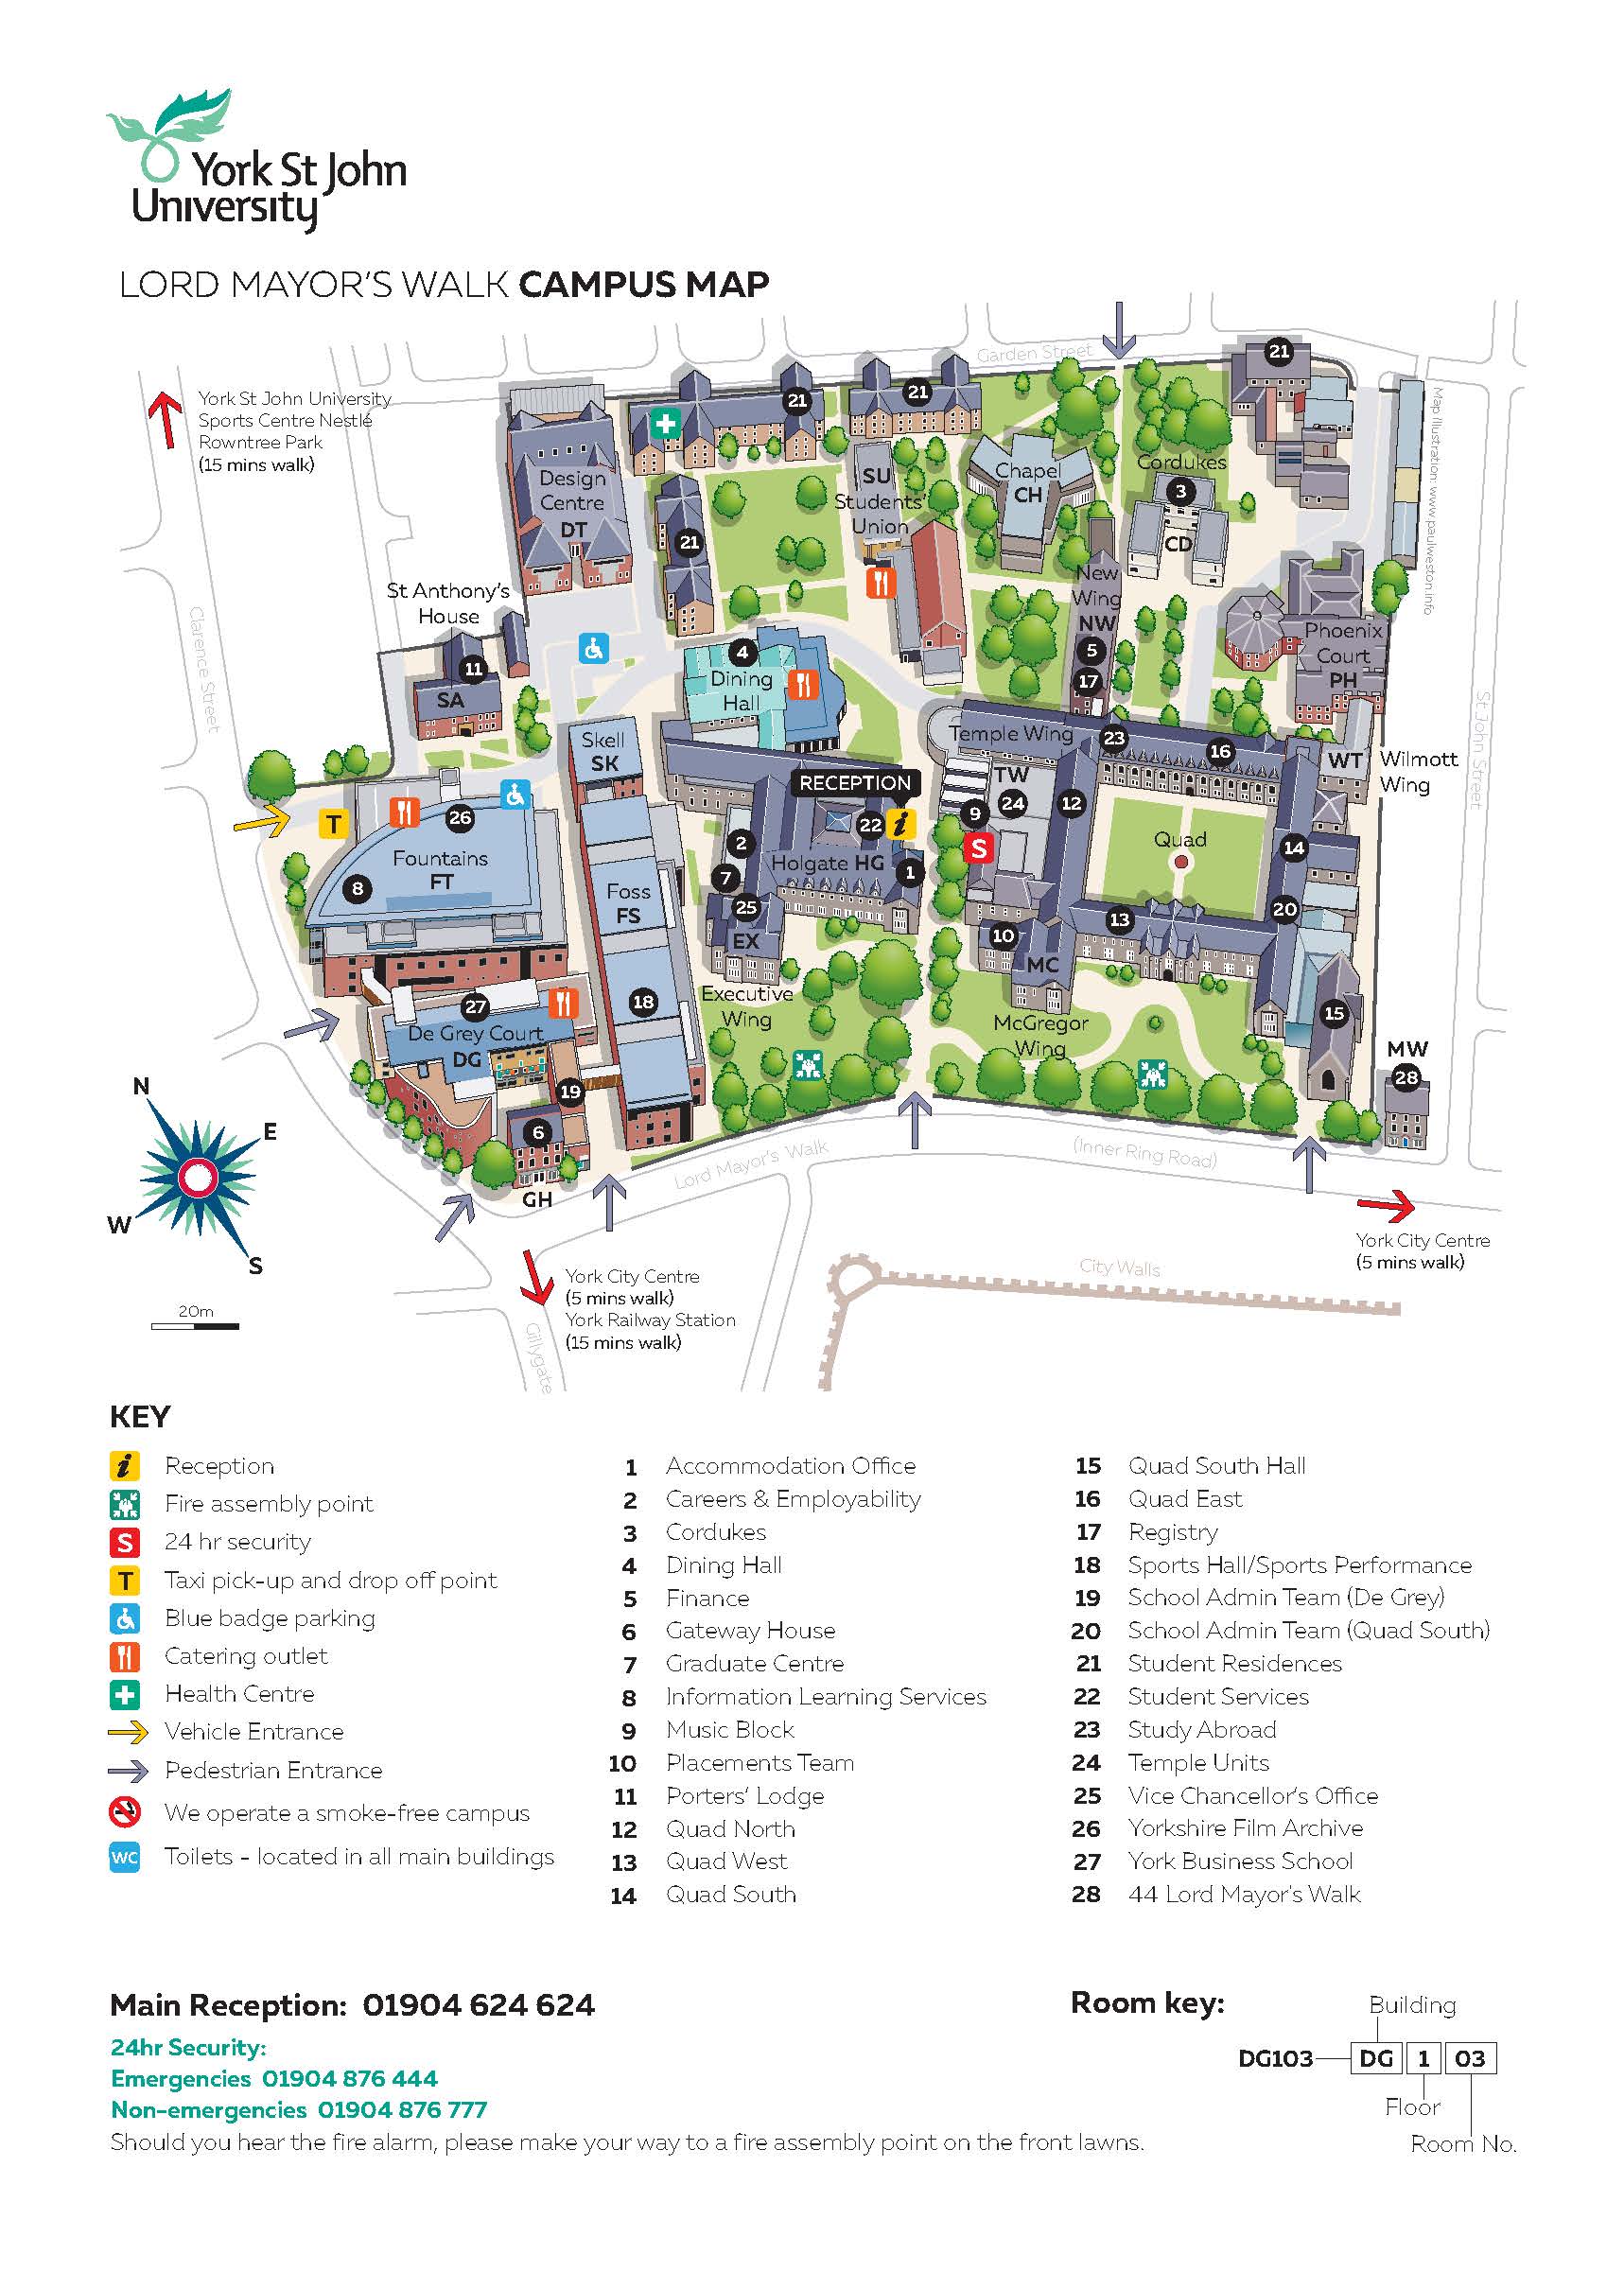 York St. John University Campus Map